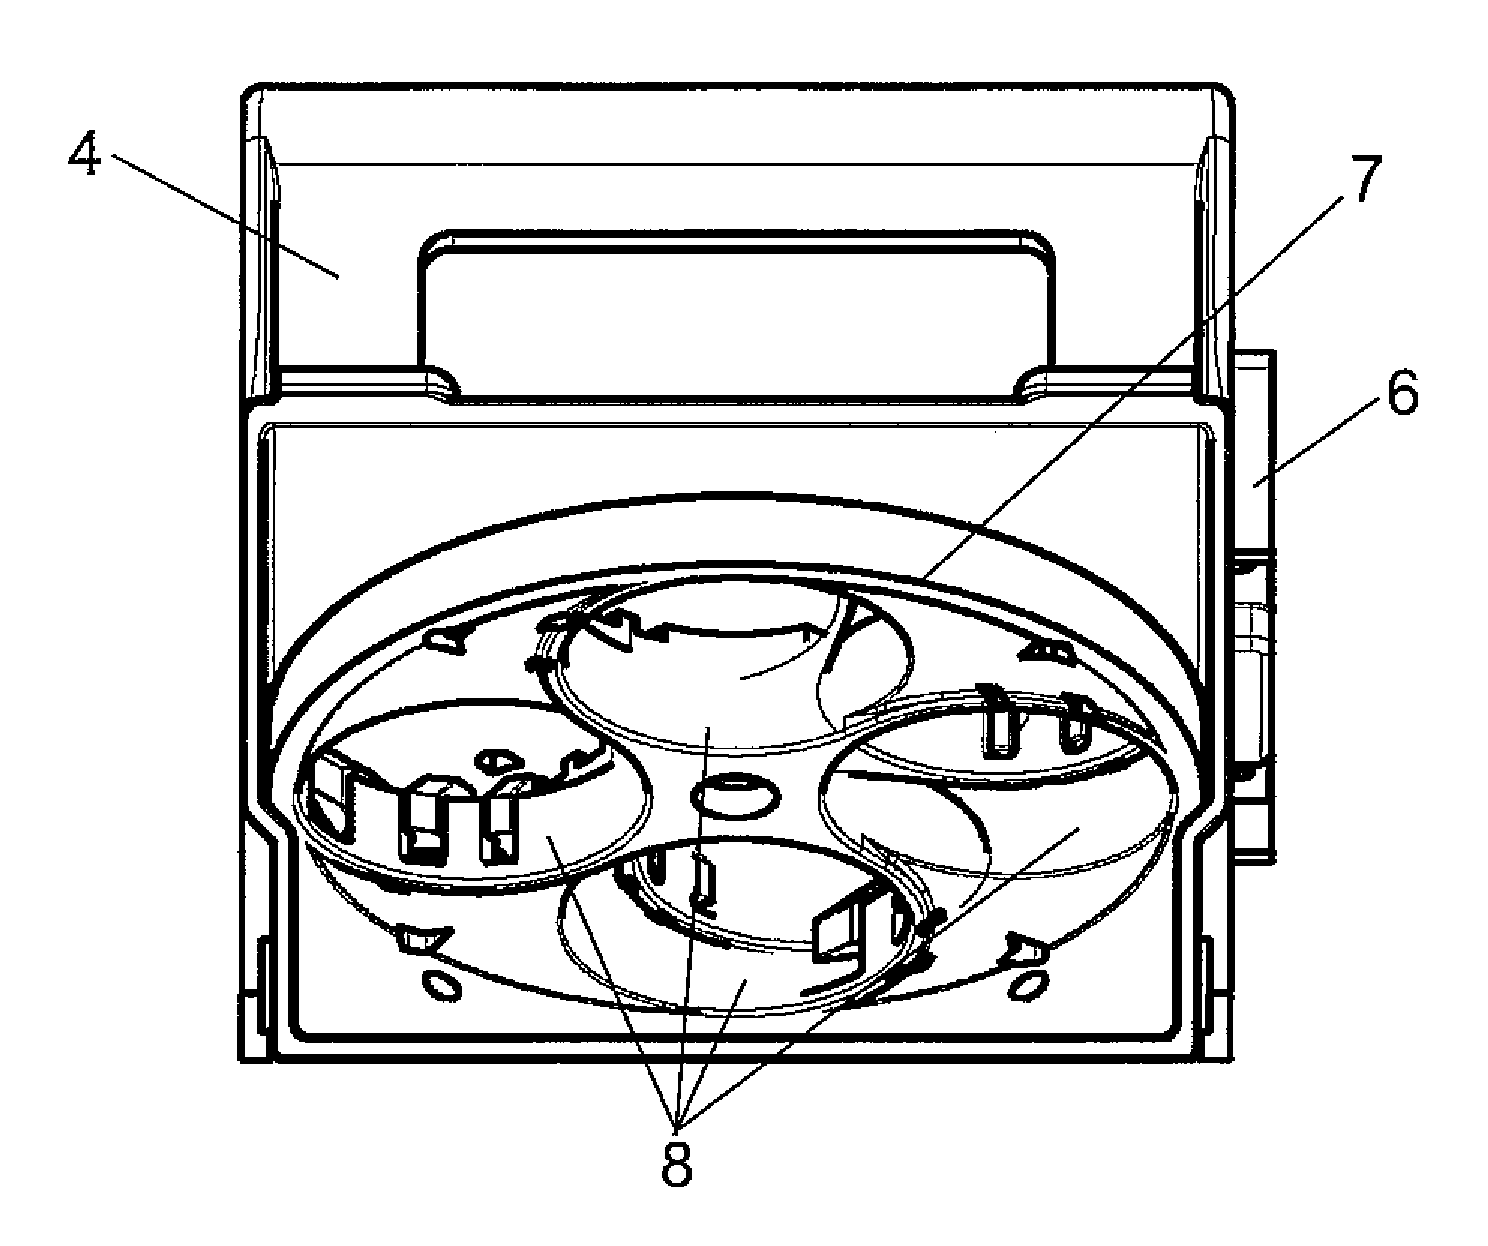 Coin dispenser